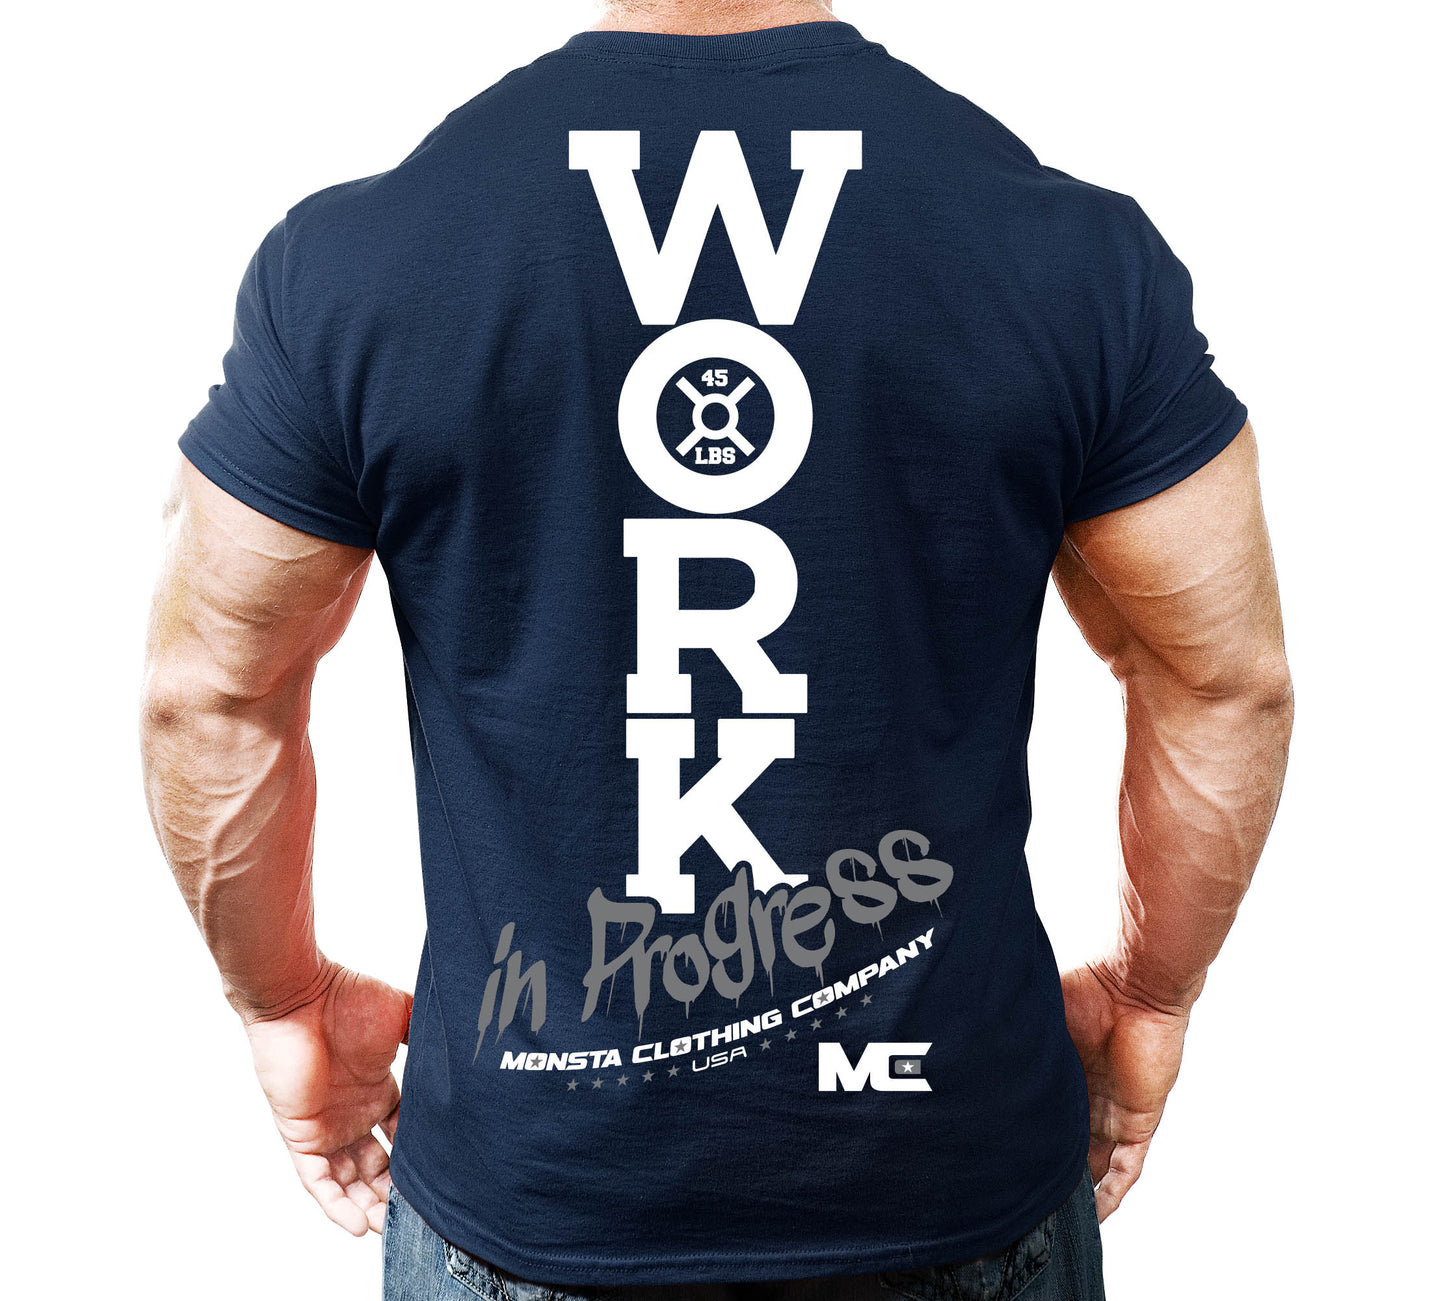 Put’n in Work: WORK in Progress-353: WT-GY